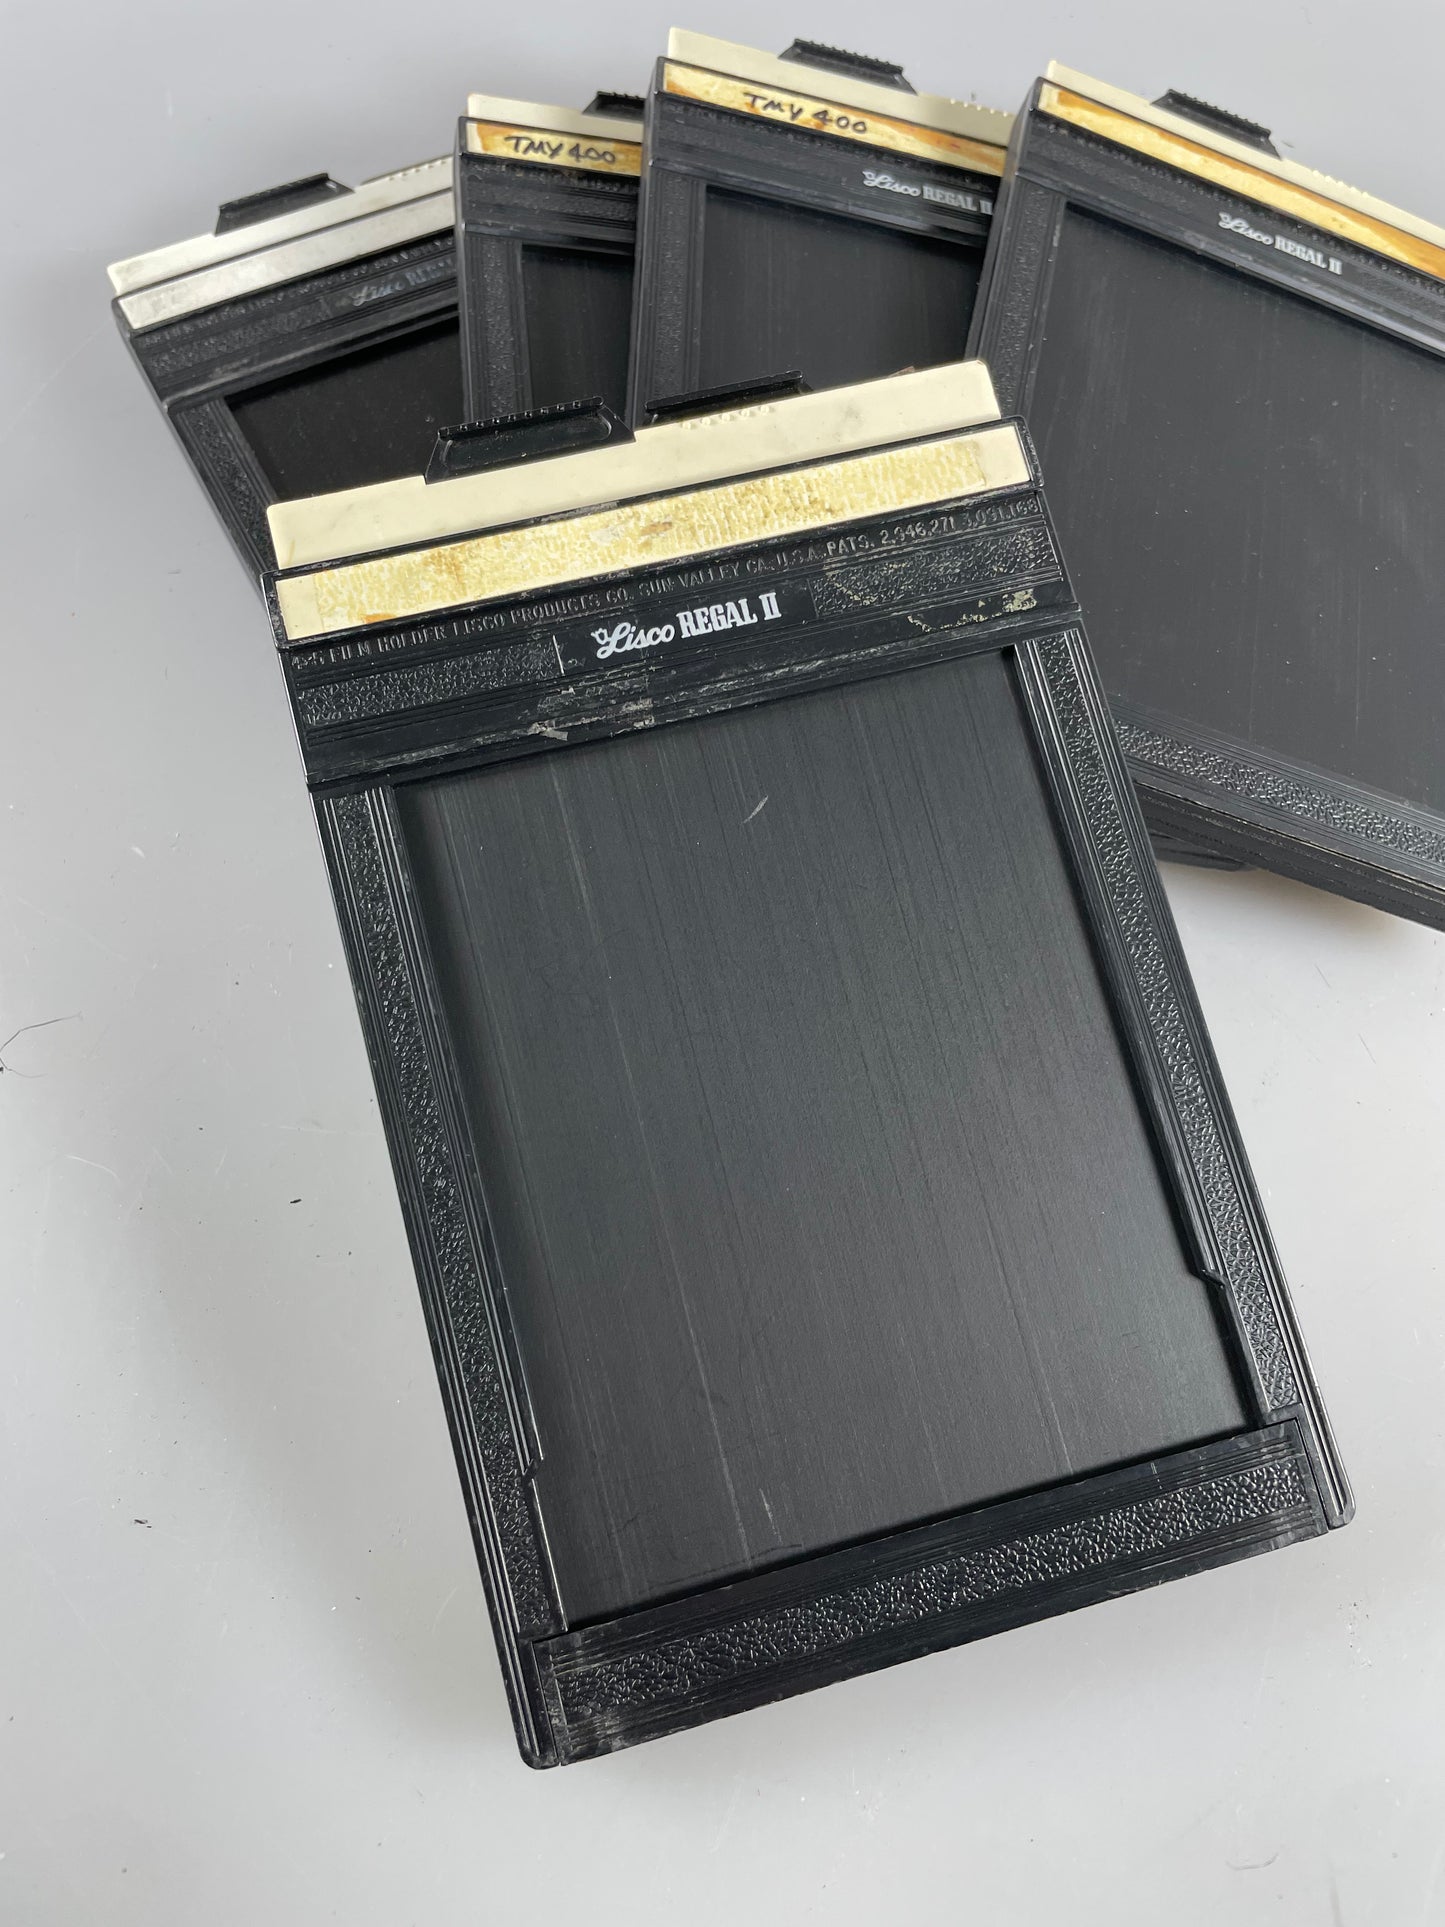 Lisco Regal II 4x5 Cut Sheet Film Holder Plastic LOT of 5